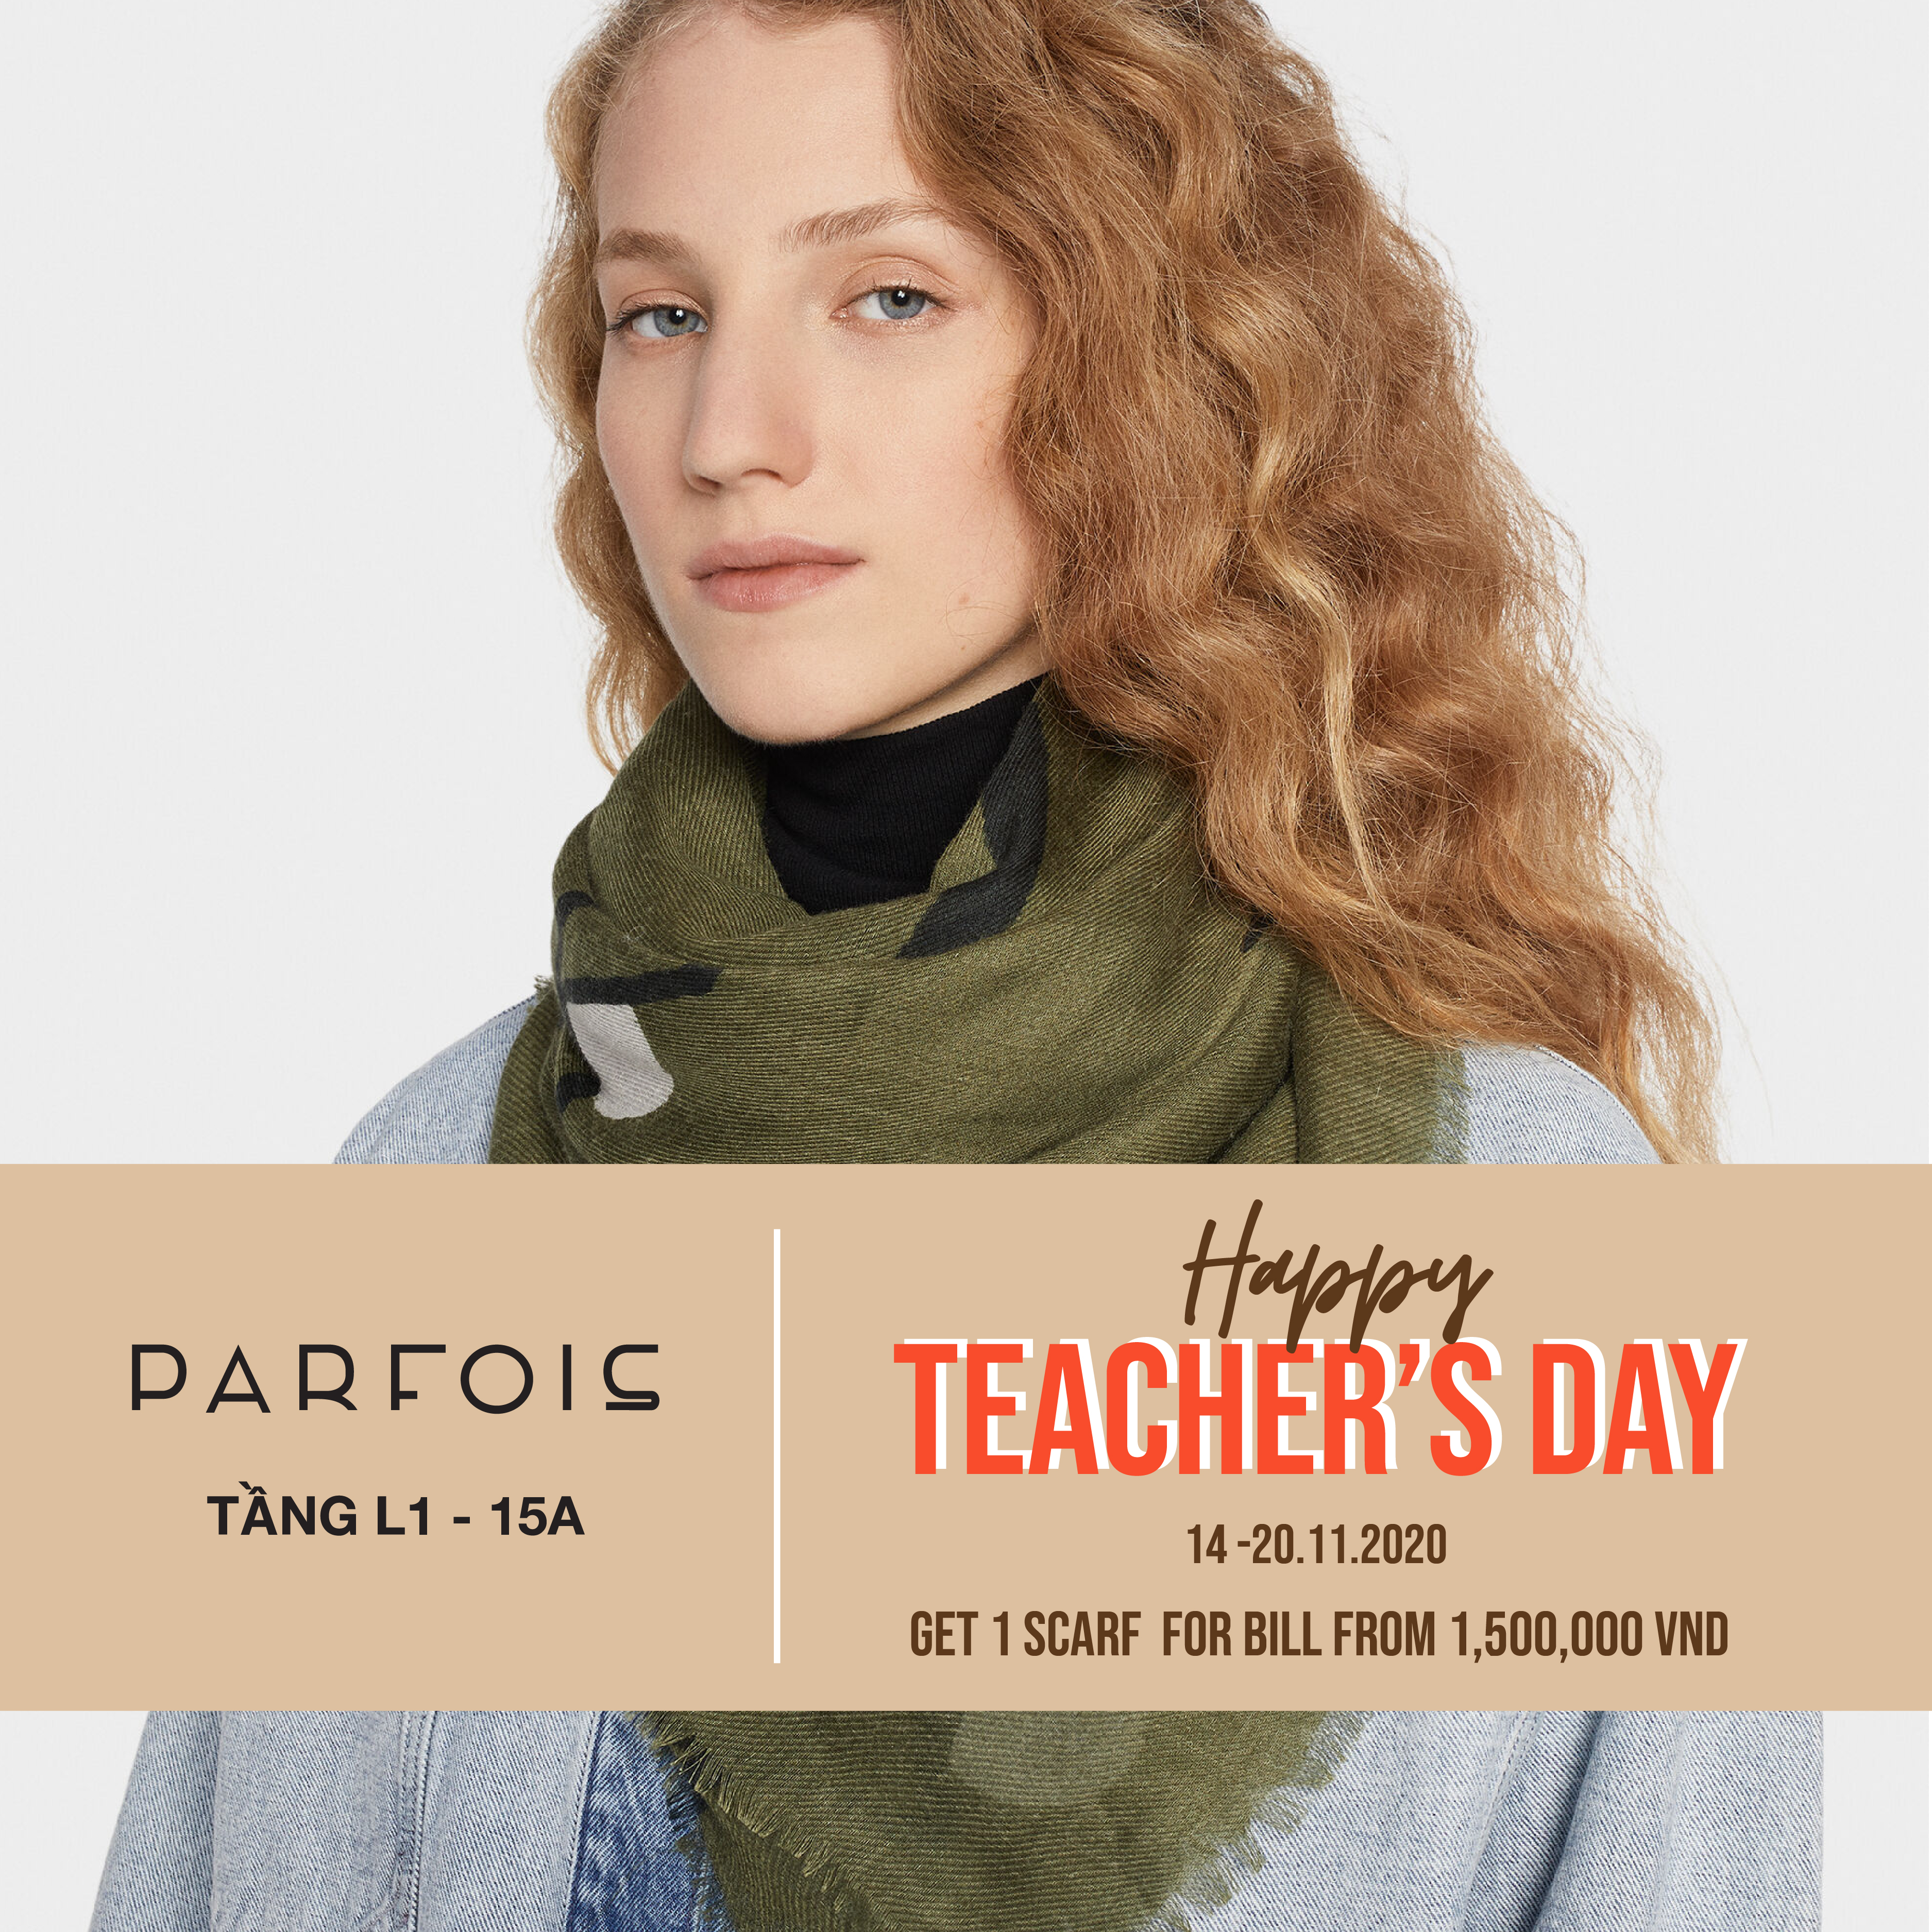 PARFOIS HAPPY TEACHER'S DAY